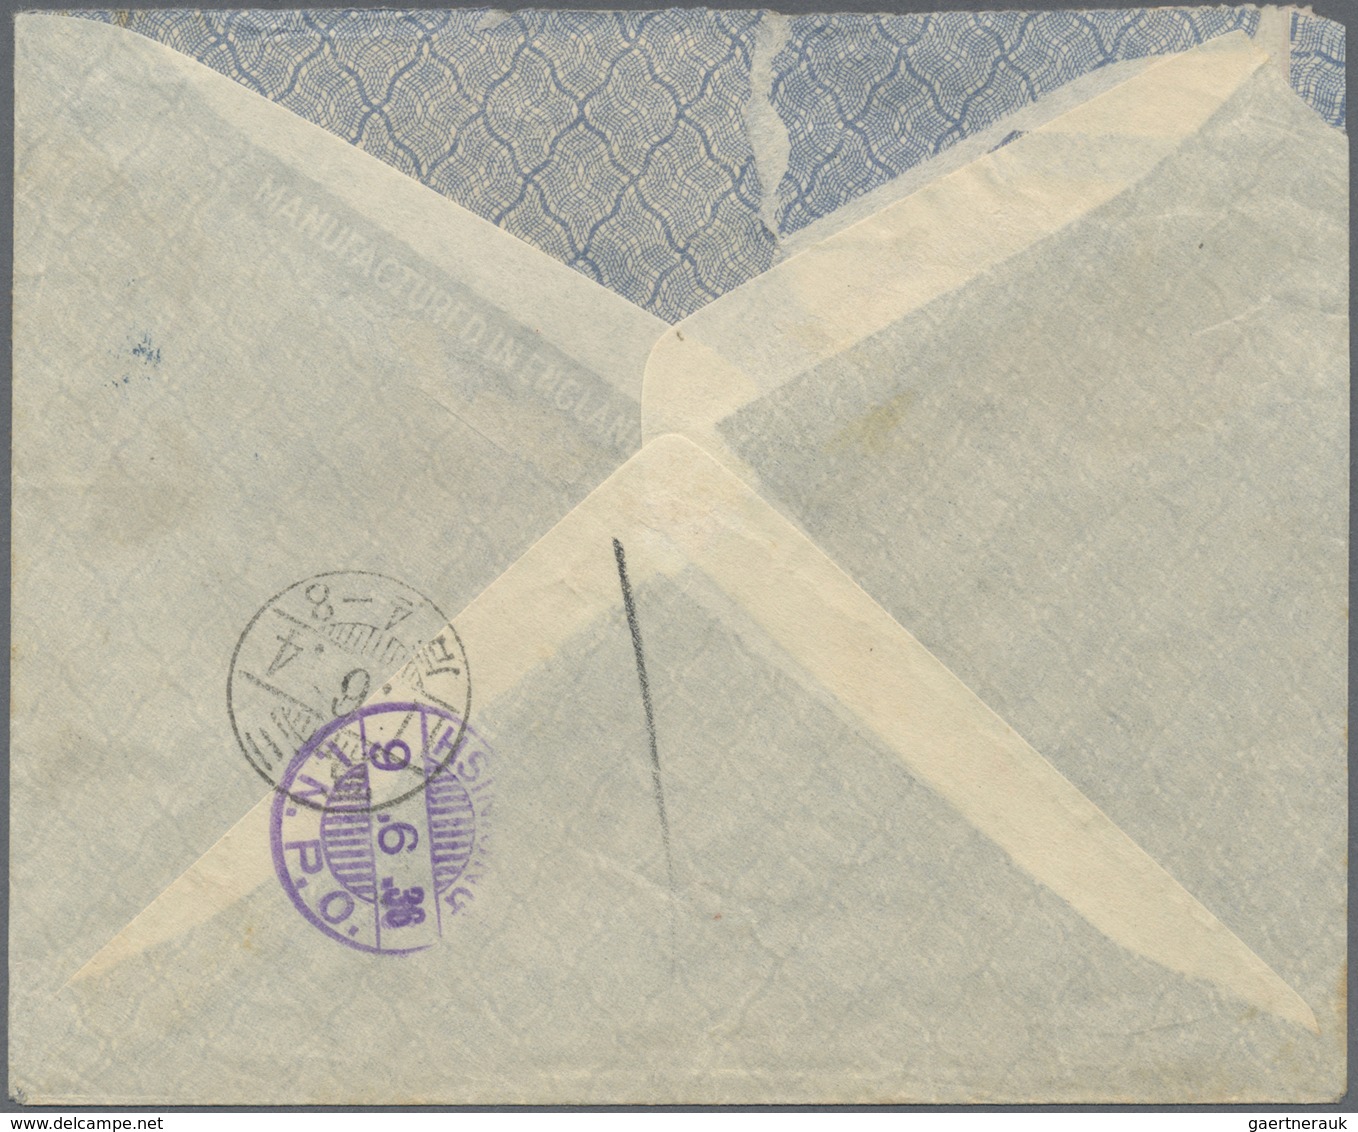 Br Mandschuko (Manchuko): 1936. Air Mail Envelope (backflap Missing) Addressed To England Bearing Japan - 1932-45 Manchuria (Manchukuo)